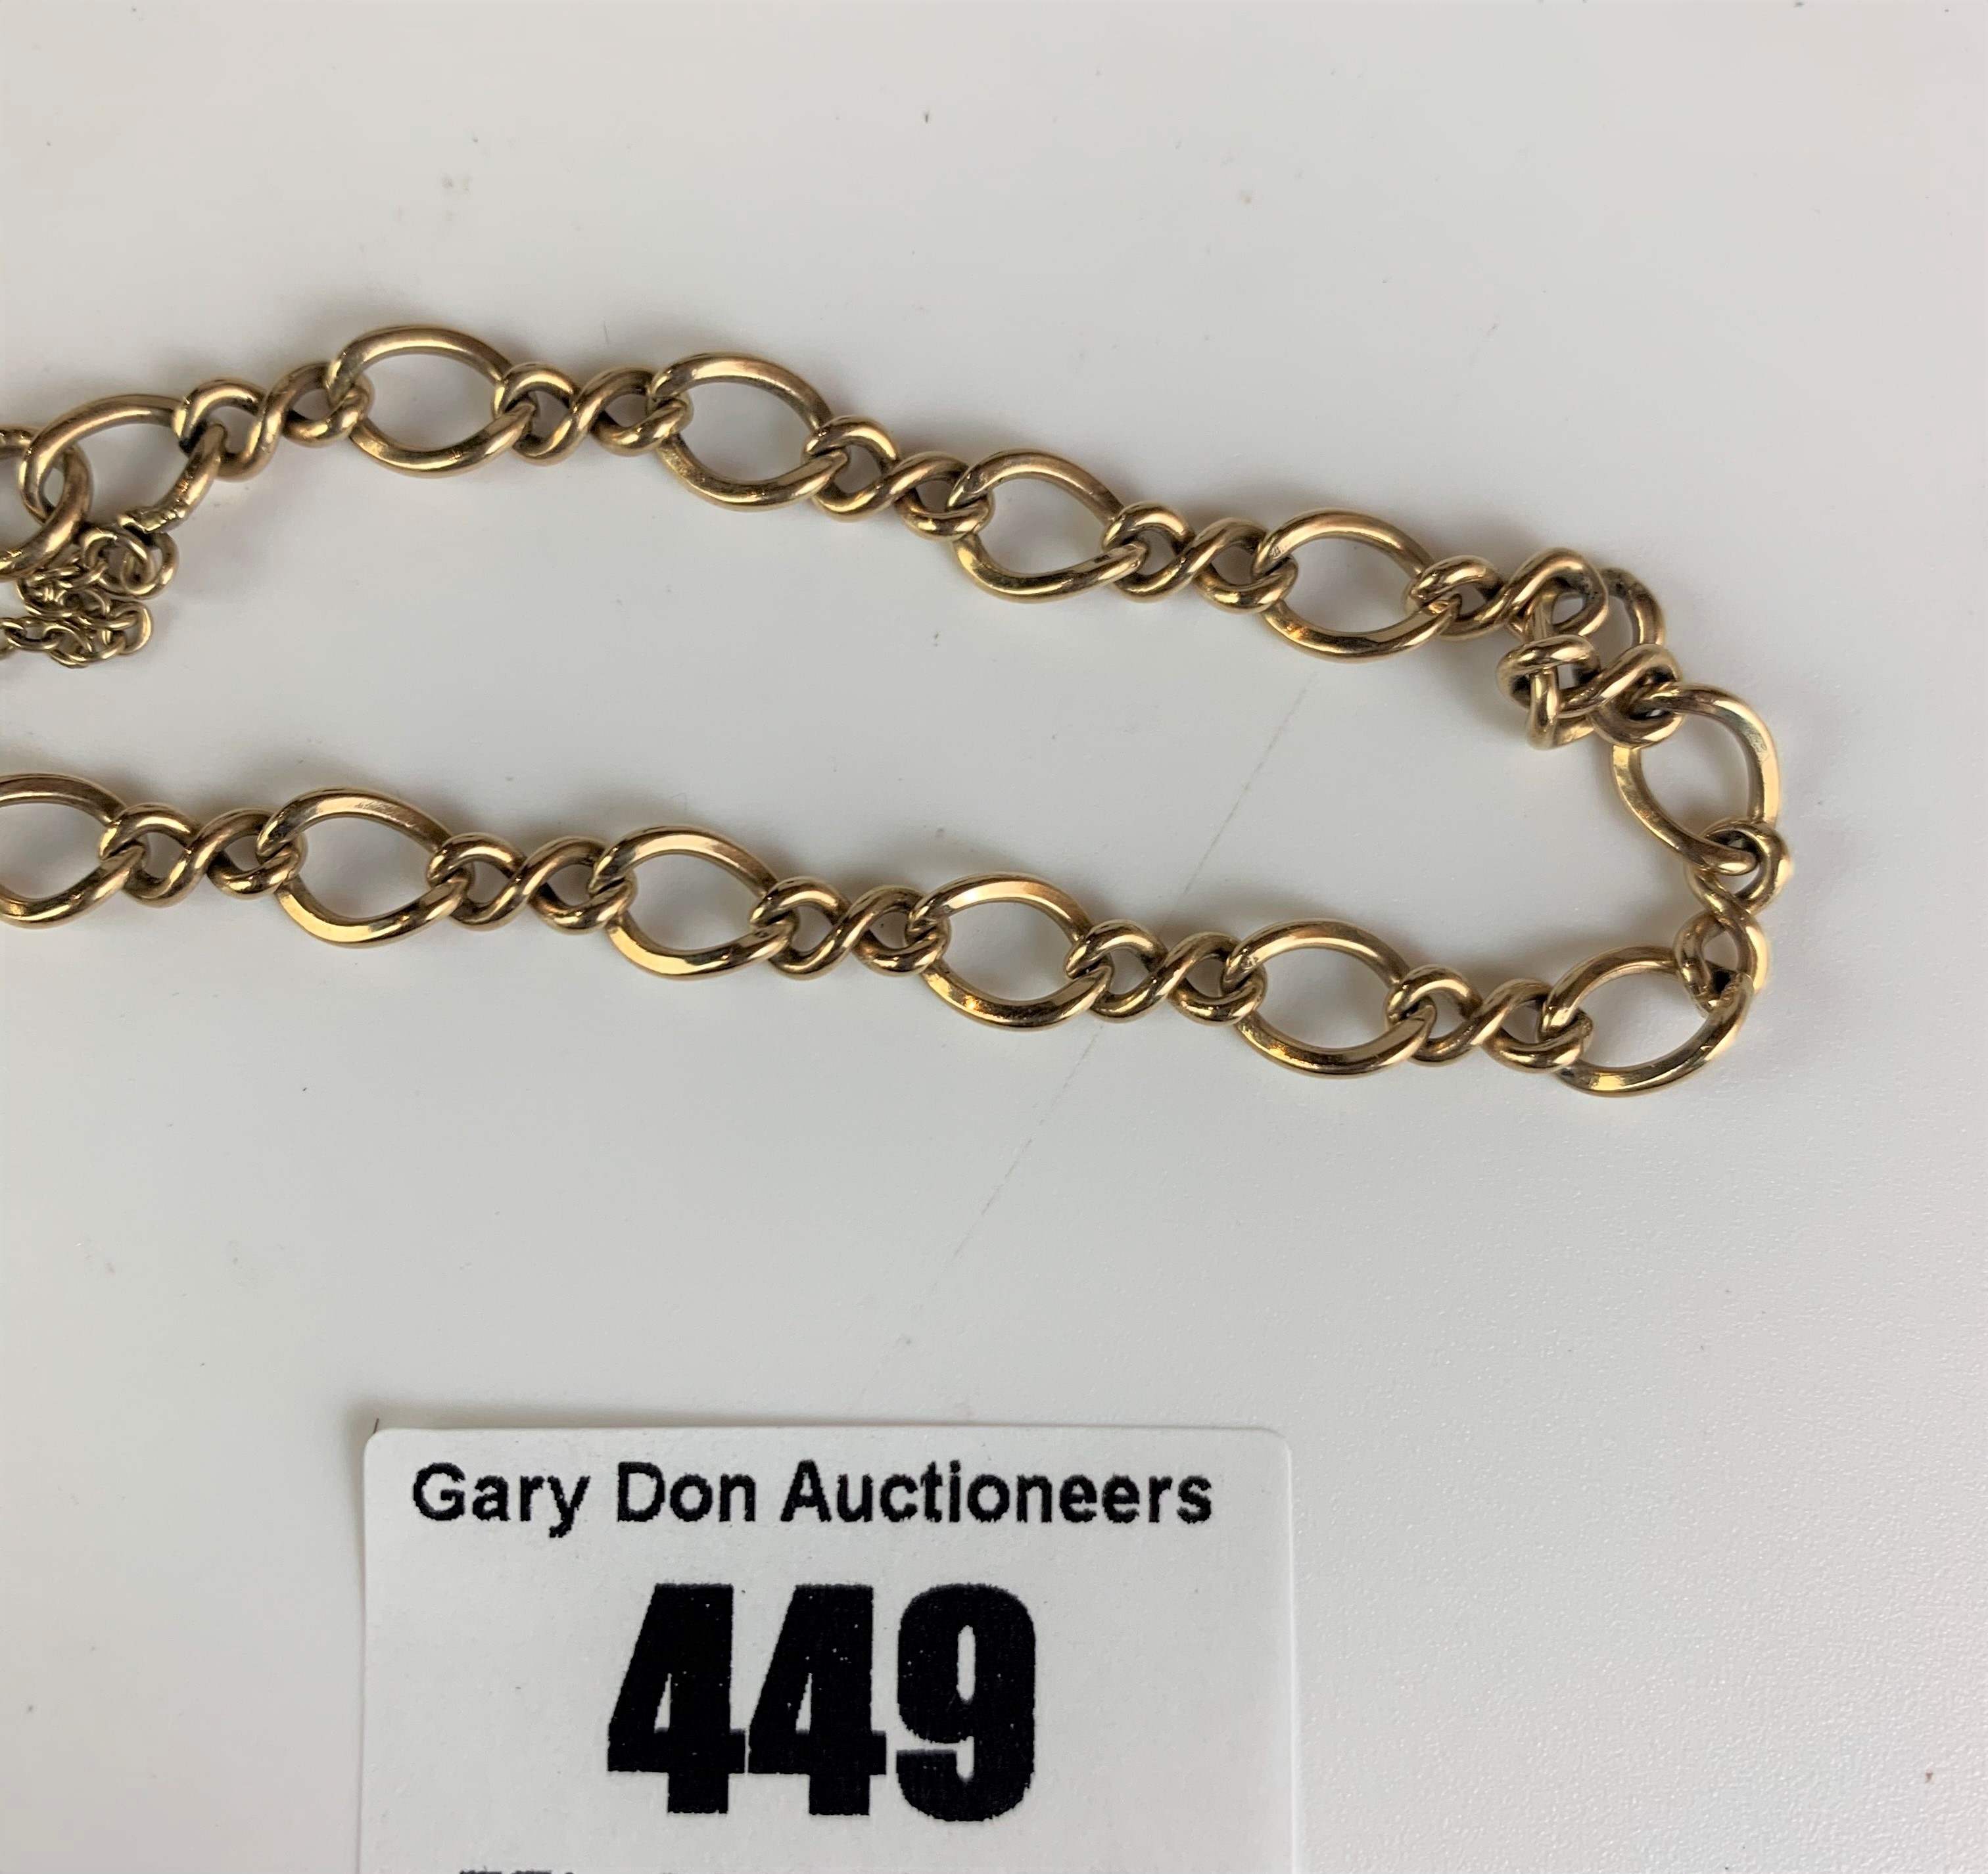 9k gold bracelet with heart lock, length 10”. W: 8.5 gms - Image 4 of 4